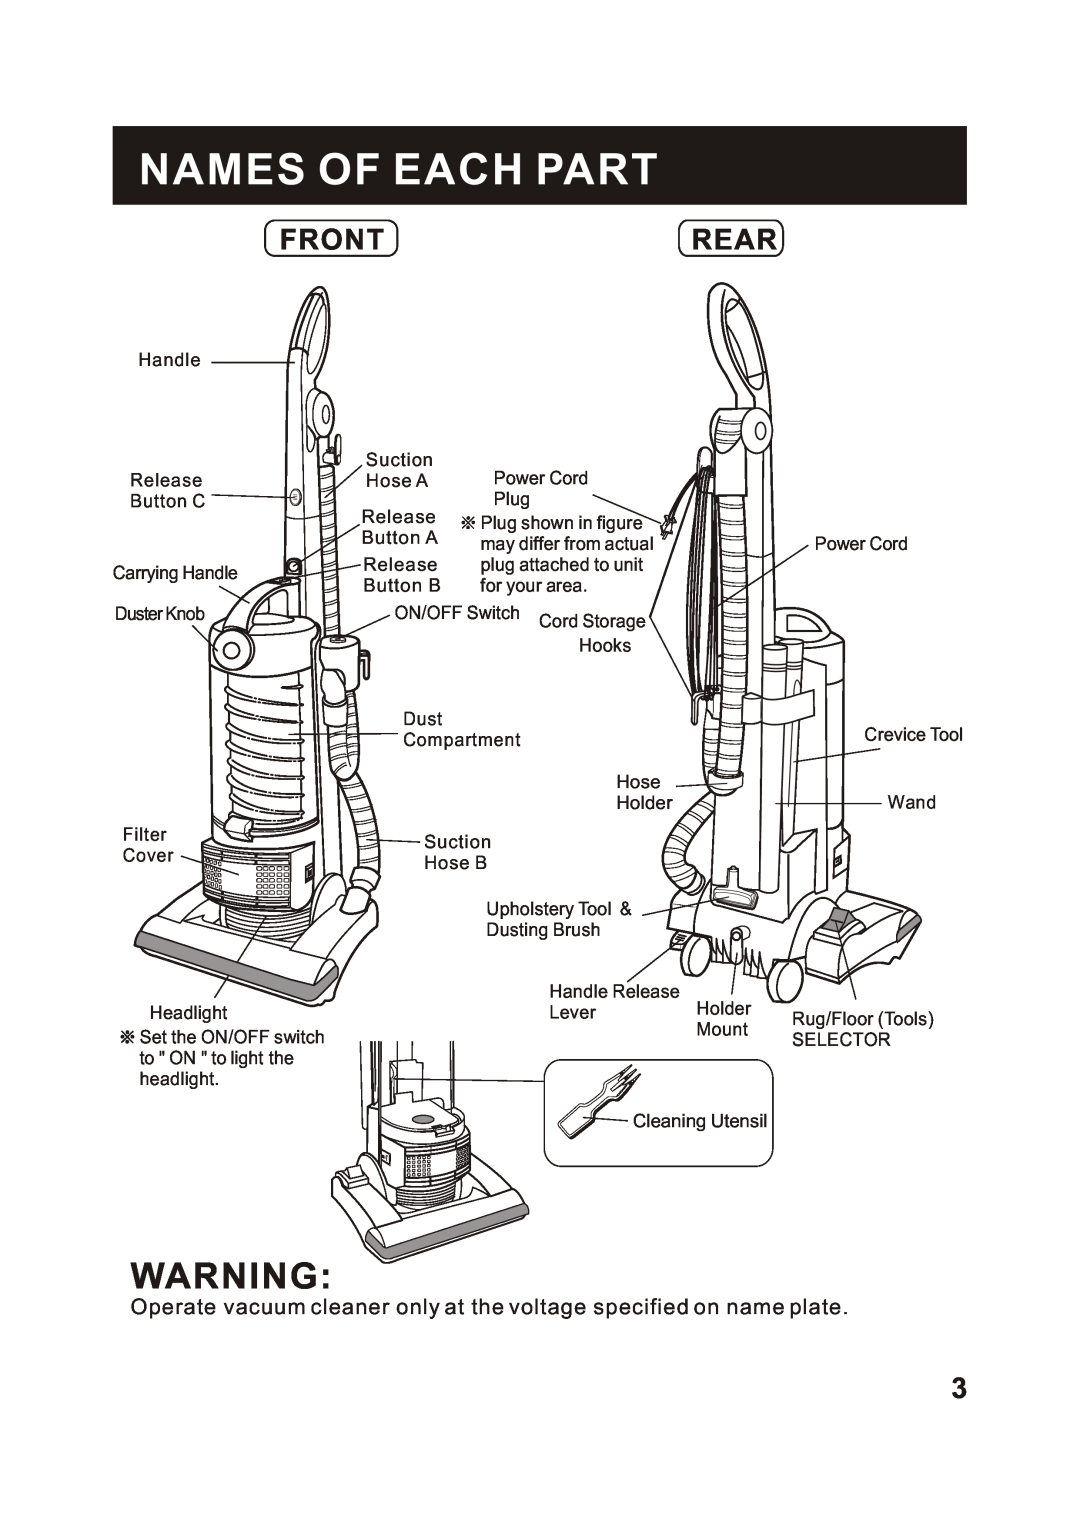 Fantom Vacuum FM741C instruction manual Names Of Each Part, Frontrear 